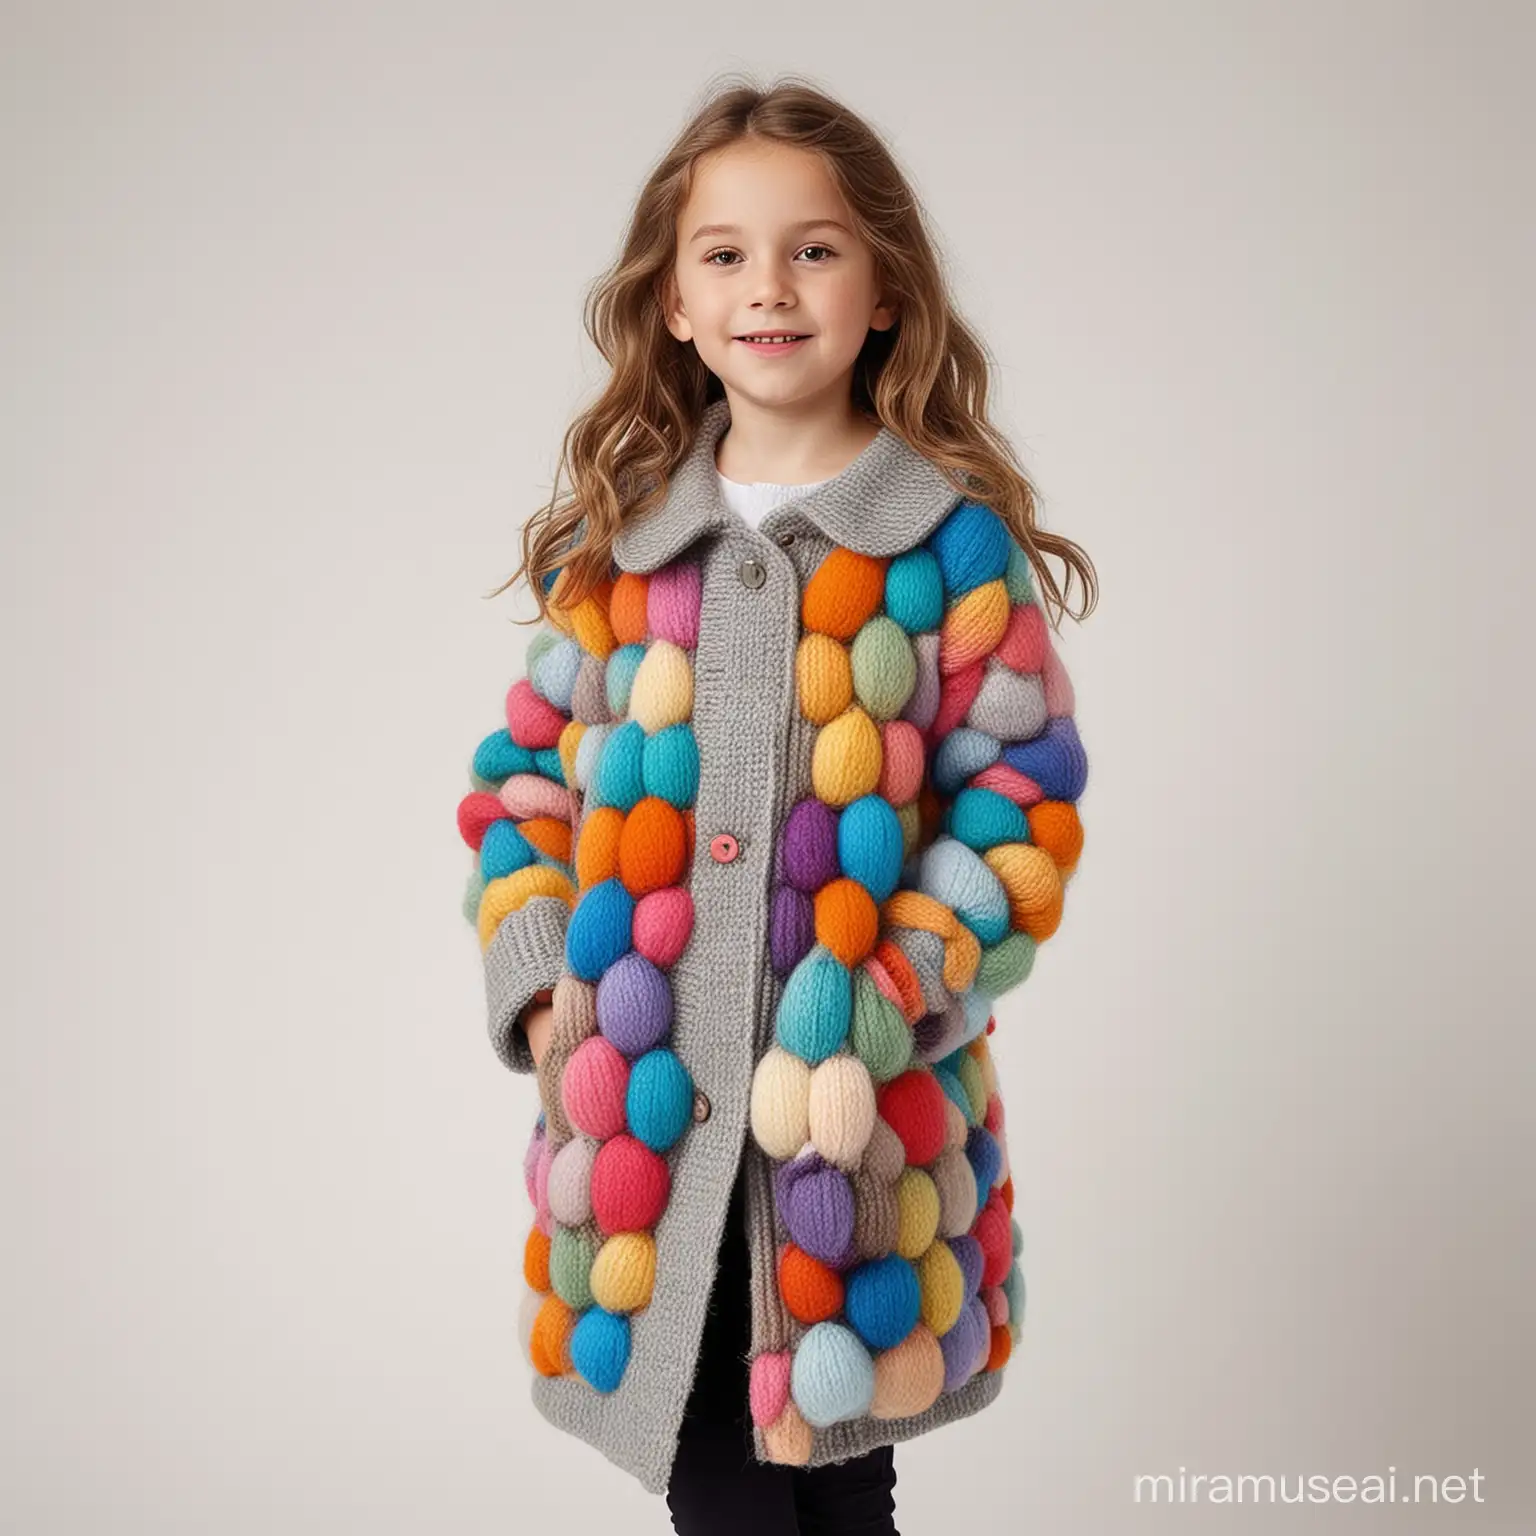 Fashionable 10YearOld in Vibrant Woollen Easter Egg Coat